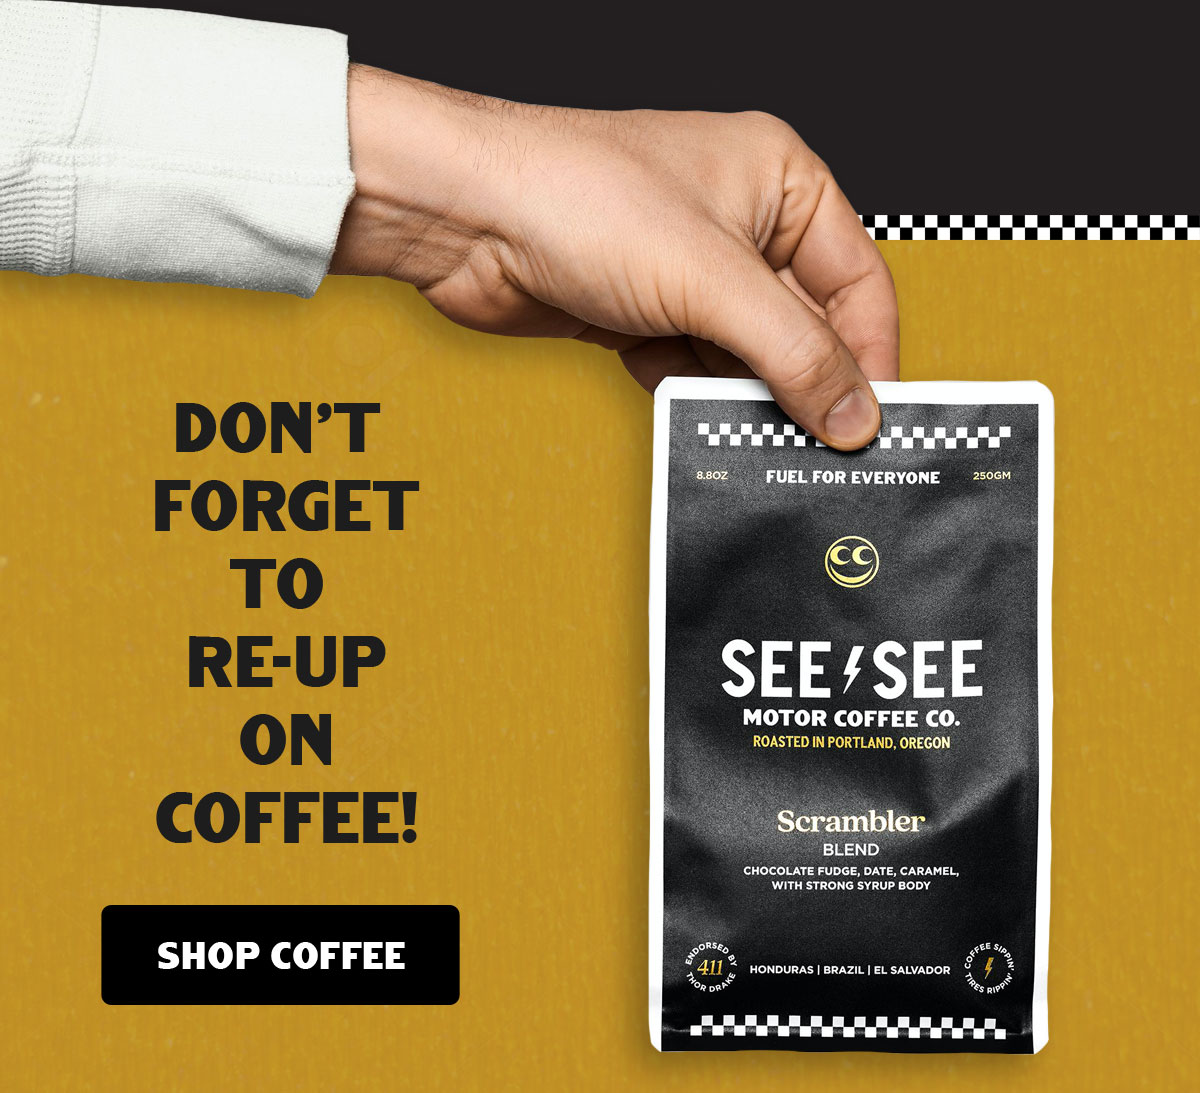 SHOP COFFEE